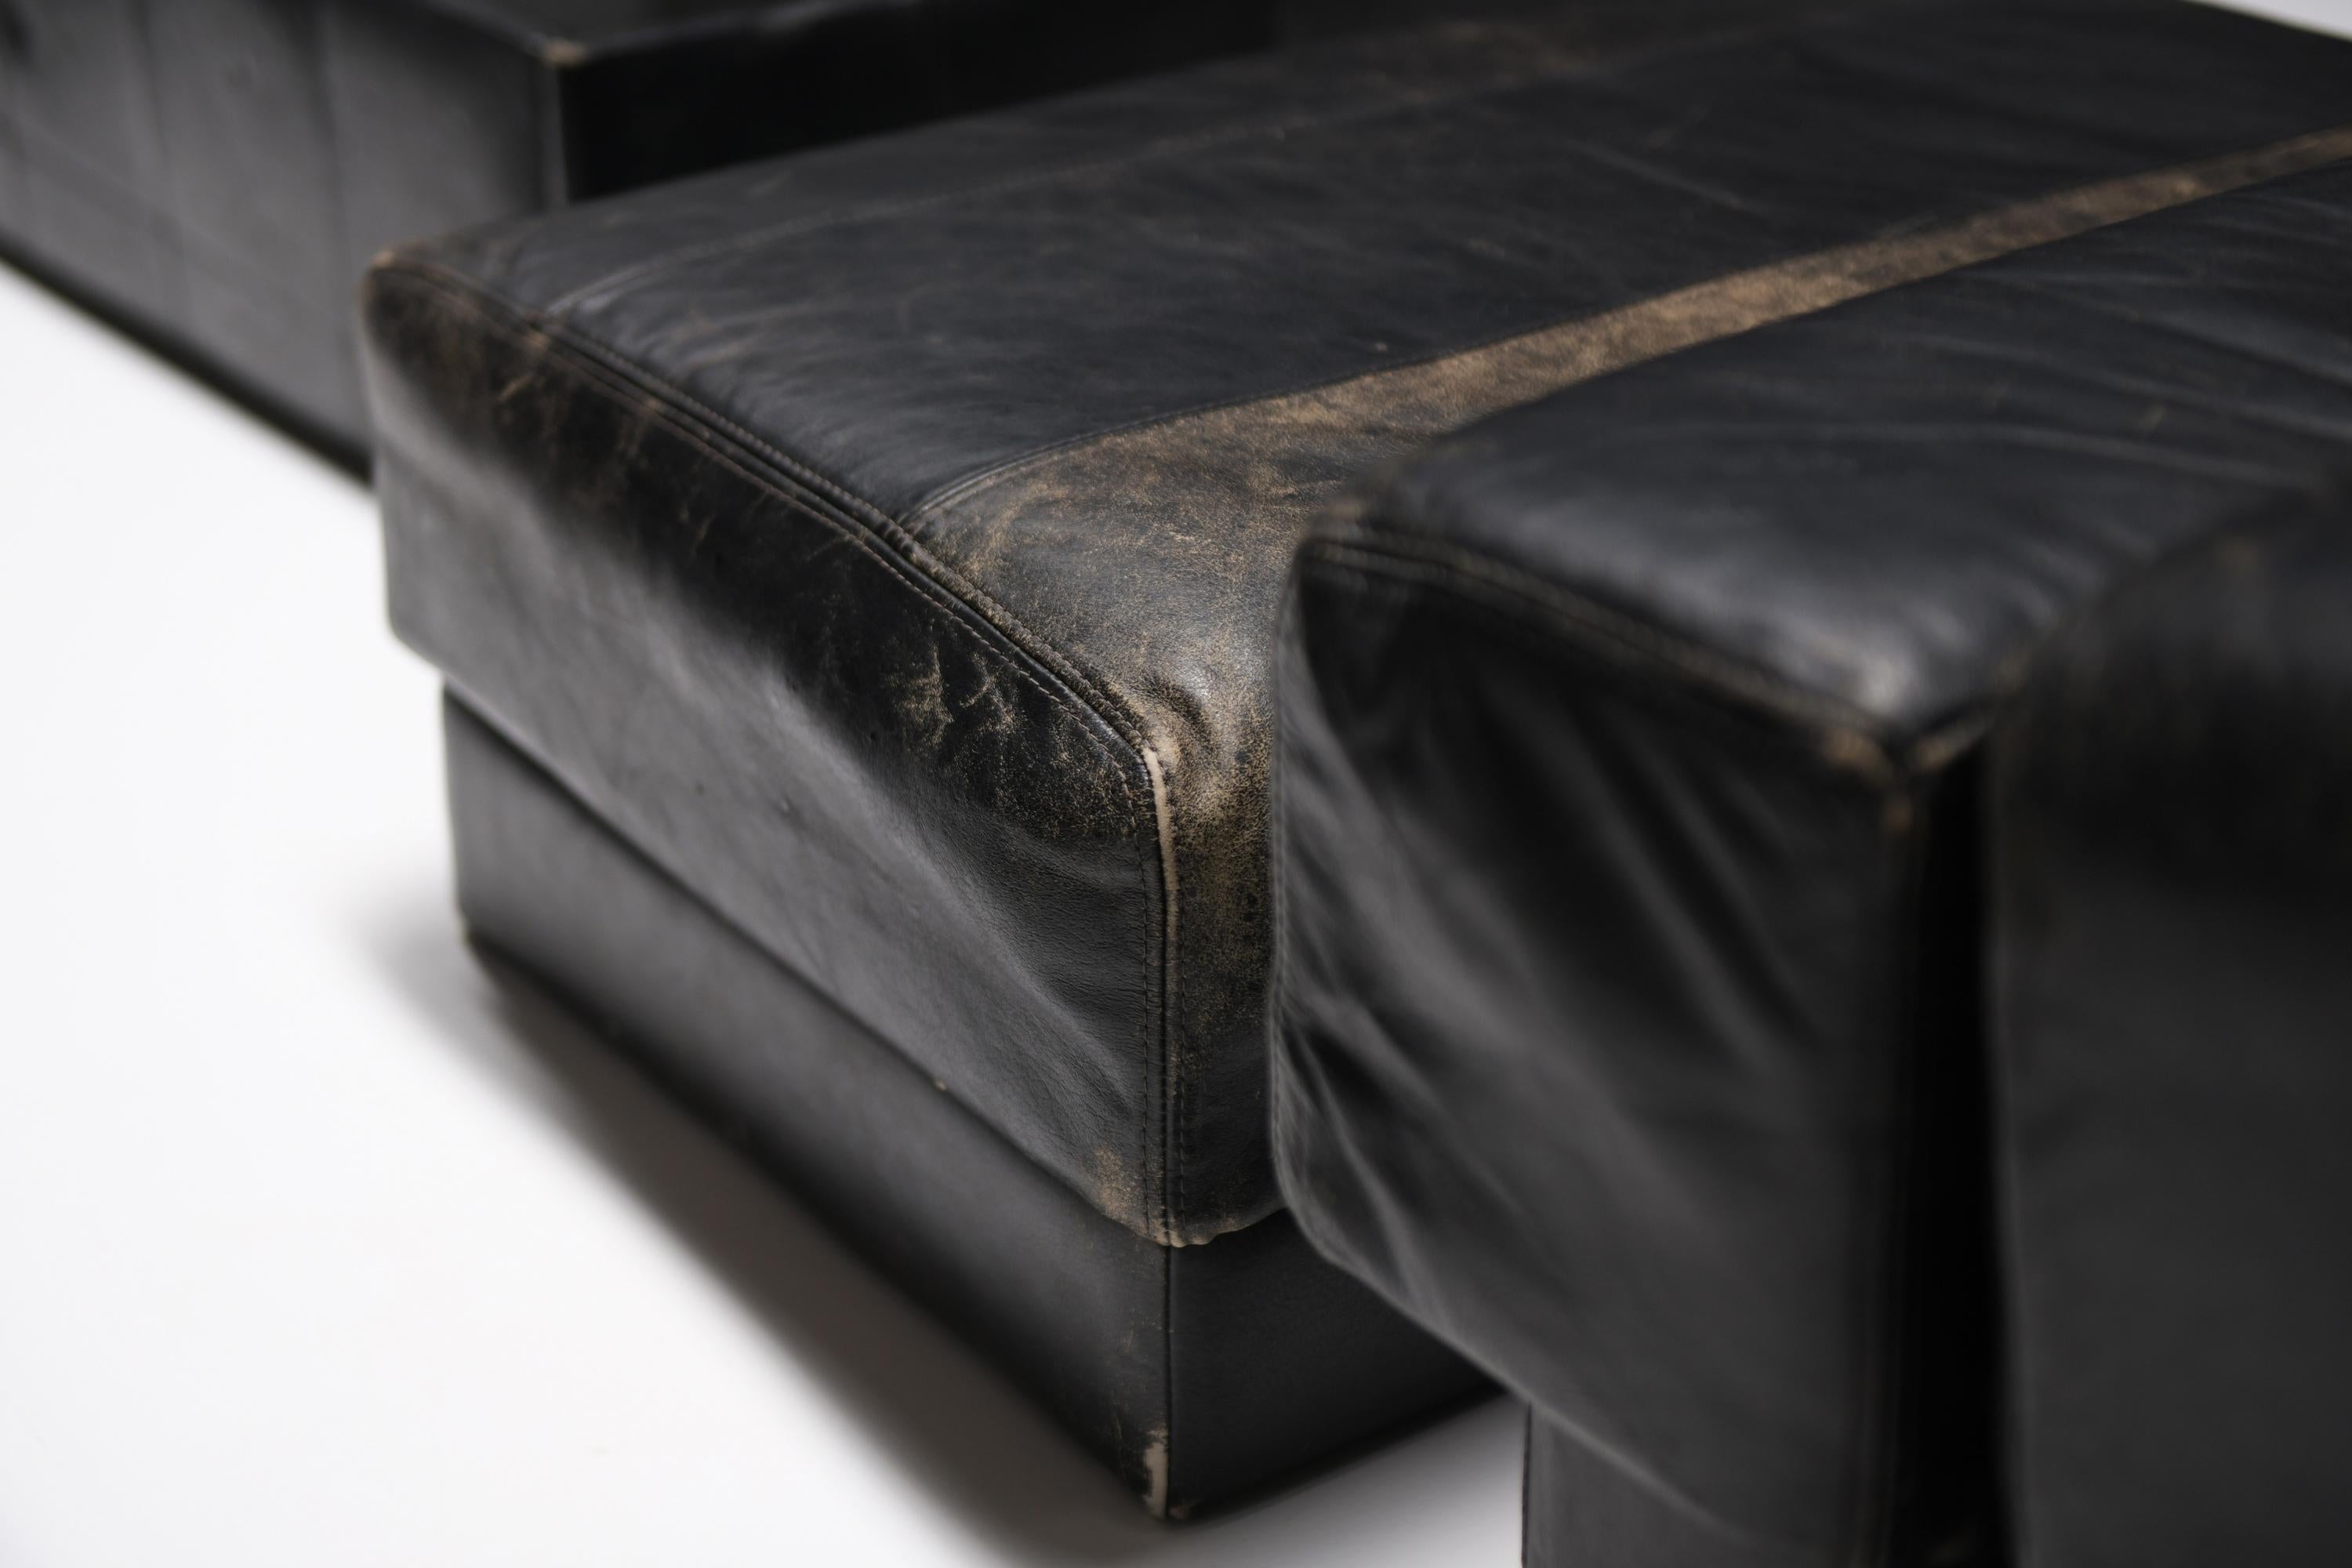 Stunning Percival Lafer sofa set in original black leather - Lafer S.A. - Brazil In Good Condition For Sale In Buggenhout, Oost-Vlaanderen